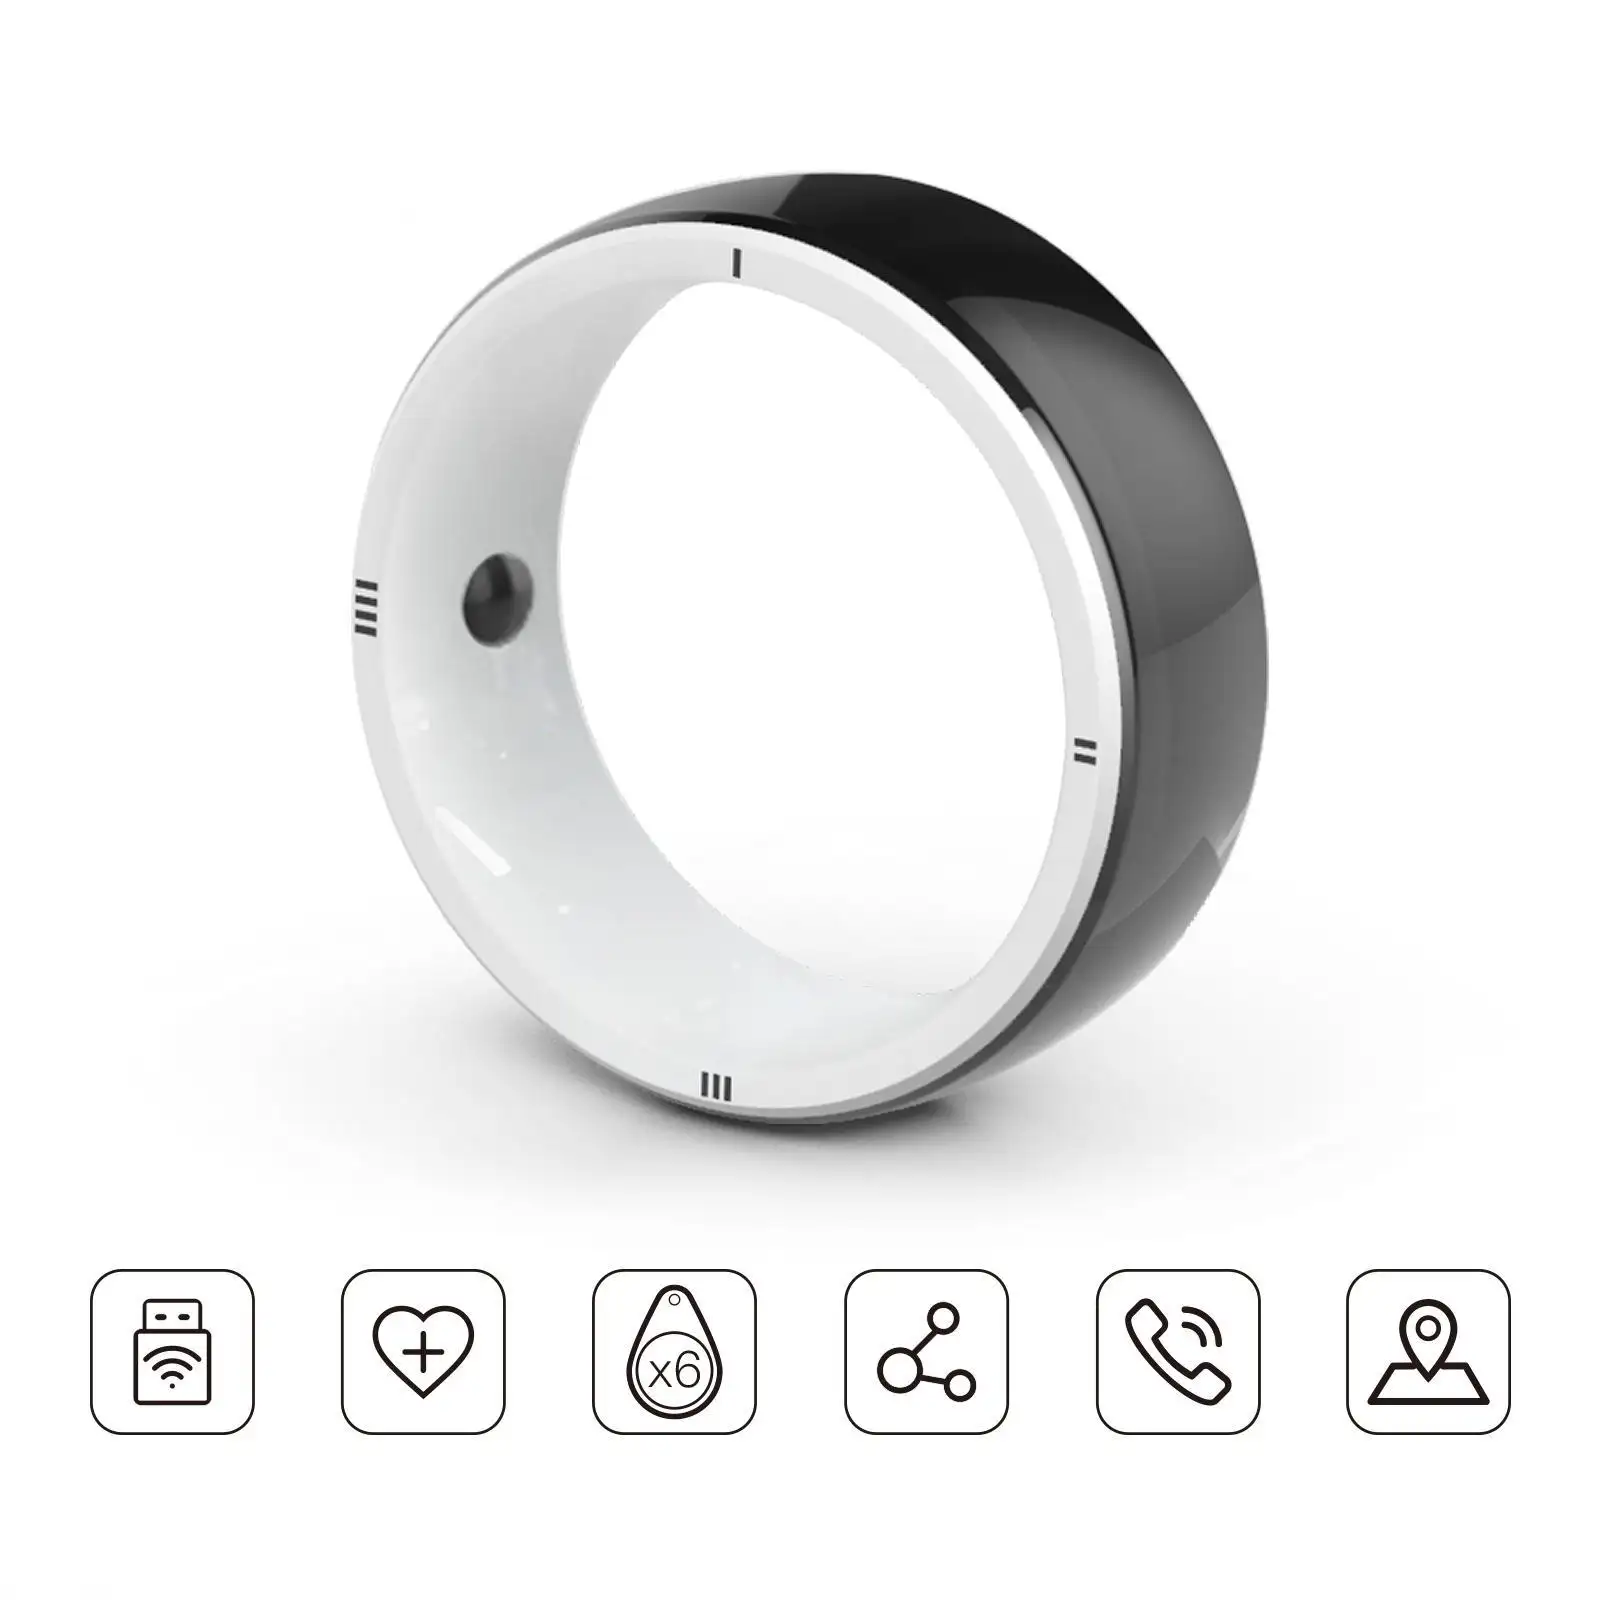 JAKCOM R5 Smart Ring neues Smart Ring Produkt als Kabelladegerät Preis 16 Port Poe Schalter liramark ata Antrieb Hülle tragbar